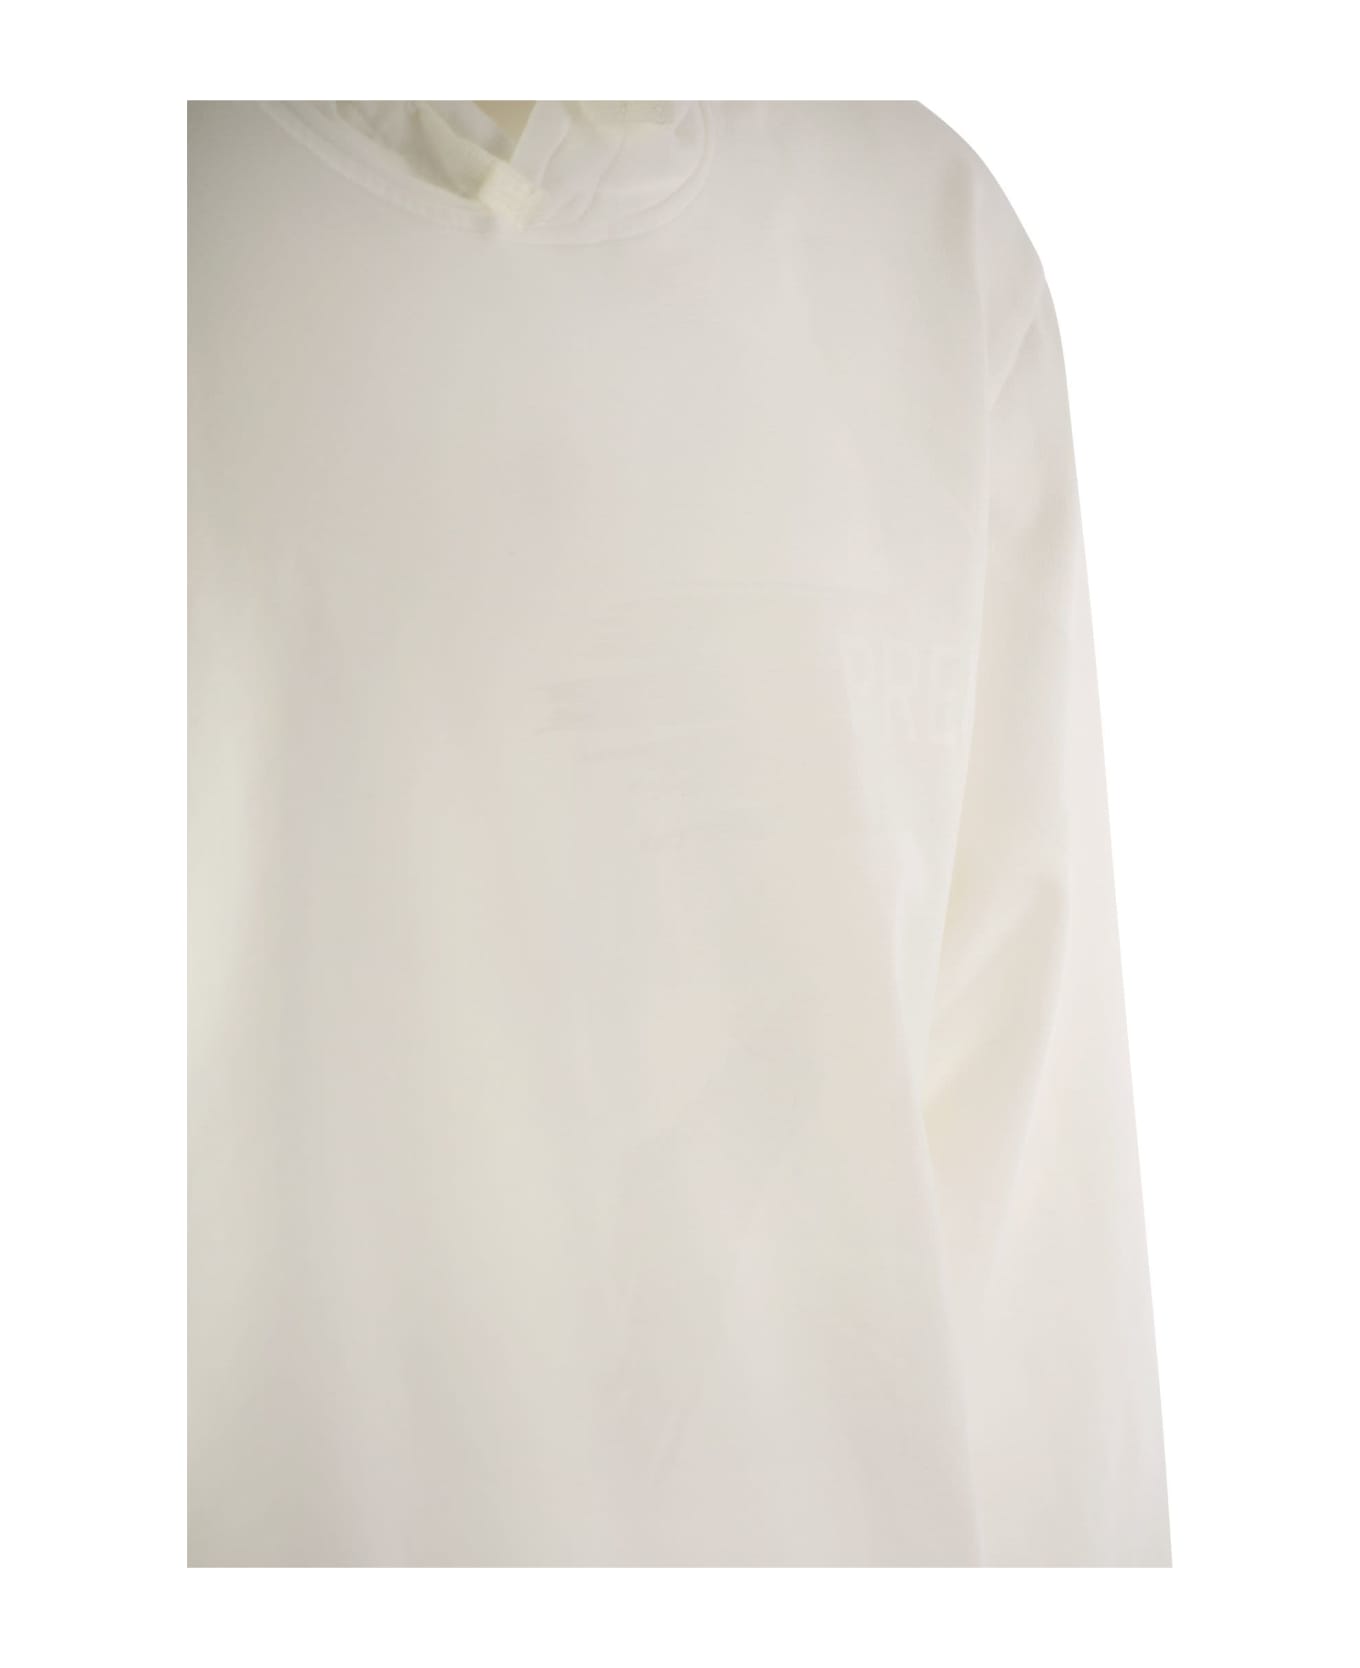 Premiata Sweatshirt Pr352230 With Hood - White ニットウェア